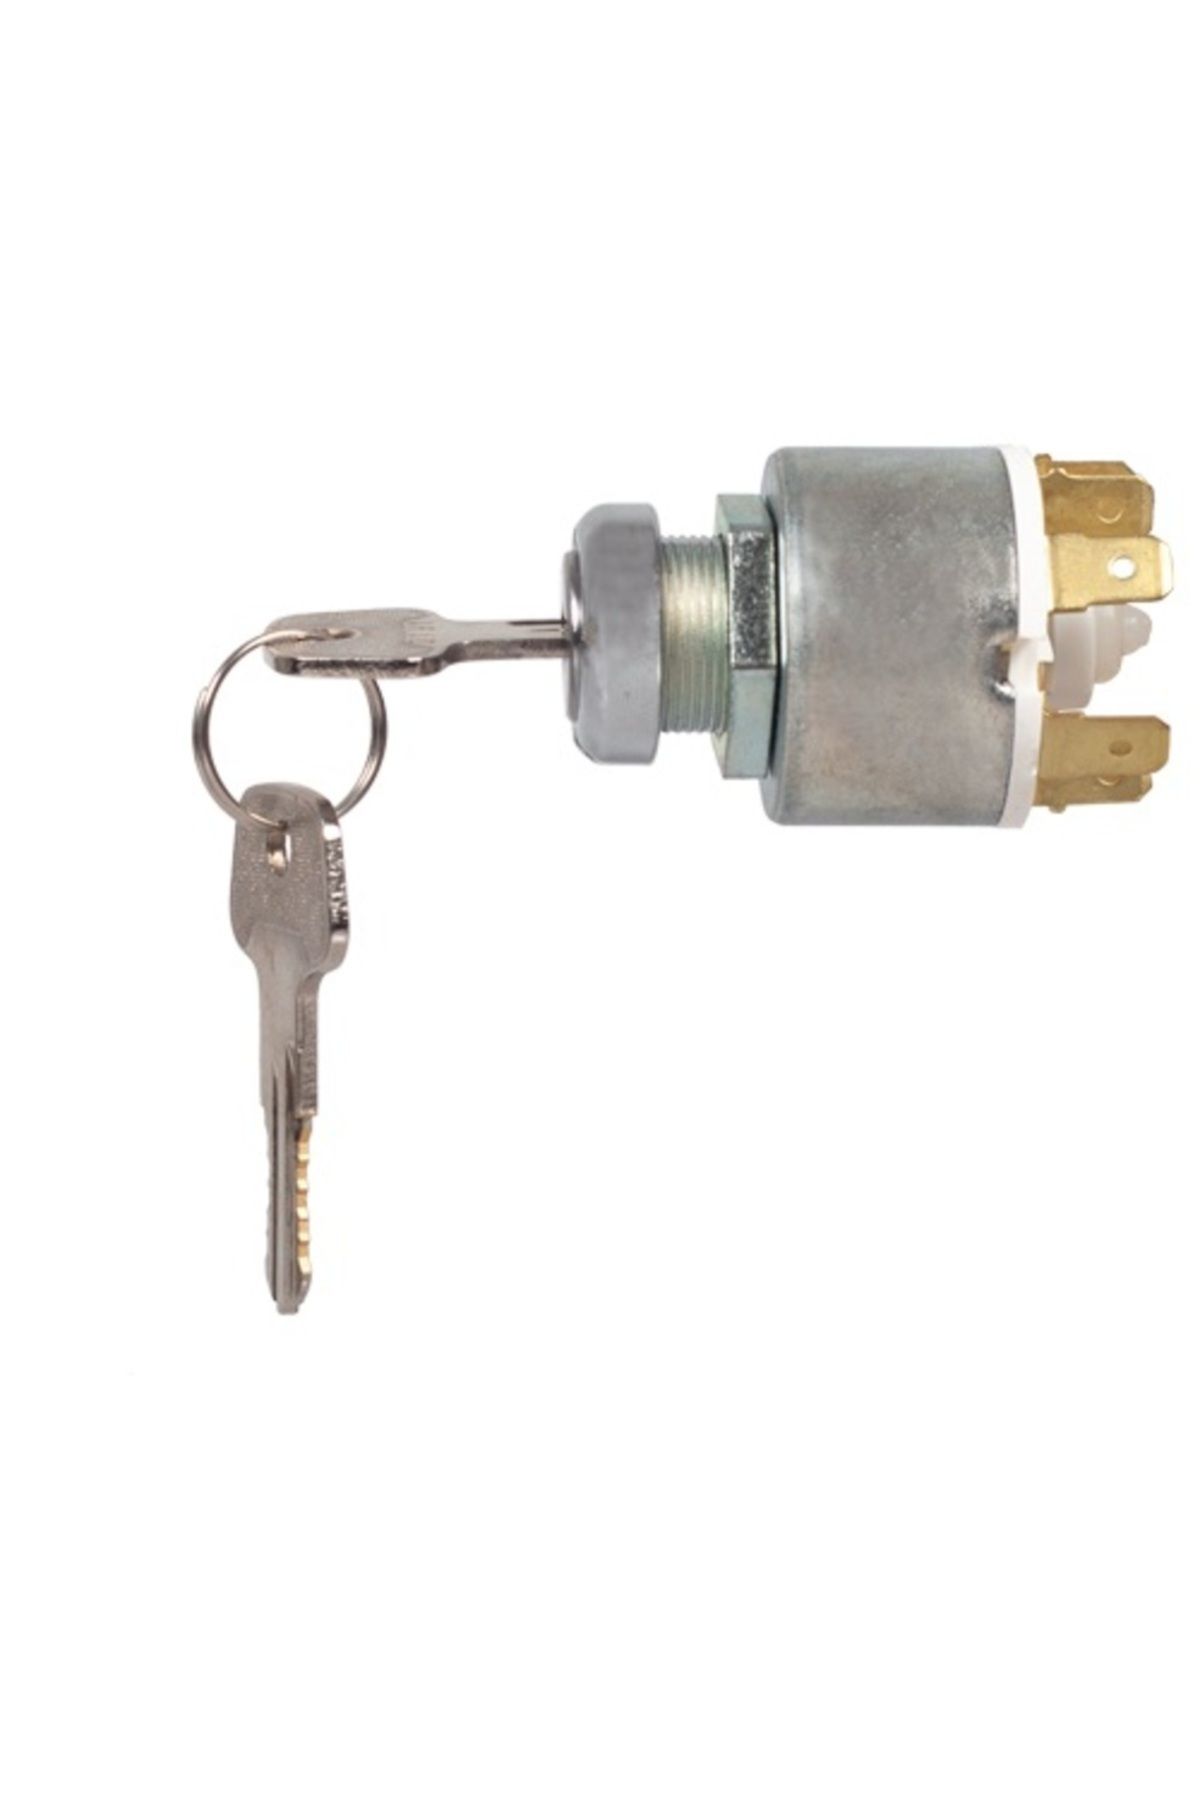 Aksa 03-002 Marşlı Kontak Anahtarı Kızdırmalı (FORD, BMC, ANADOL)